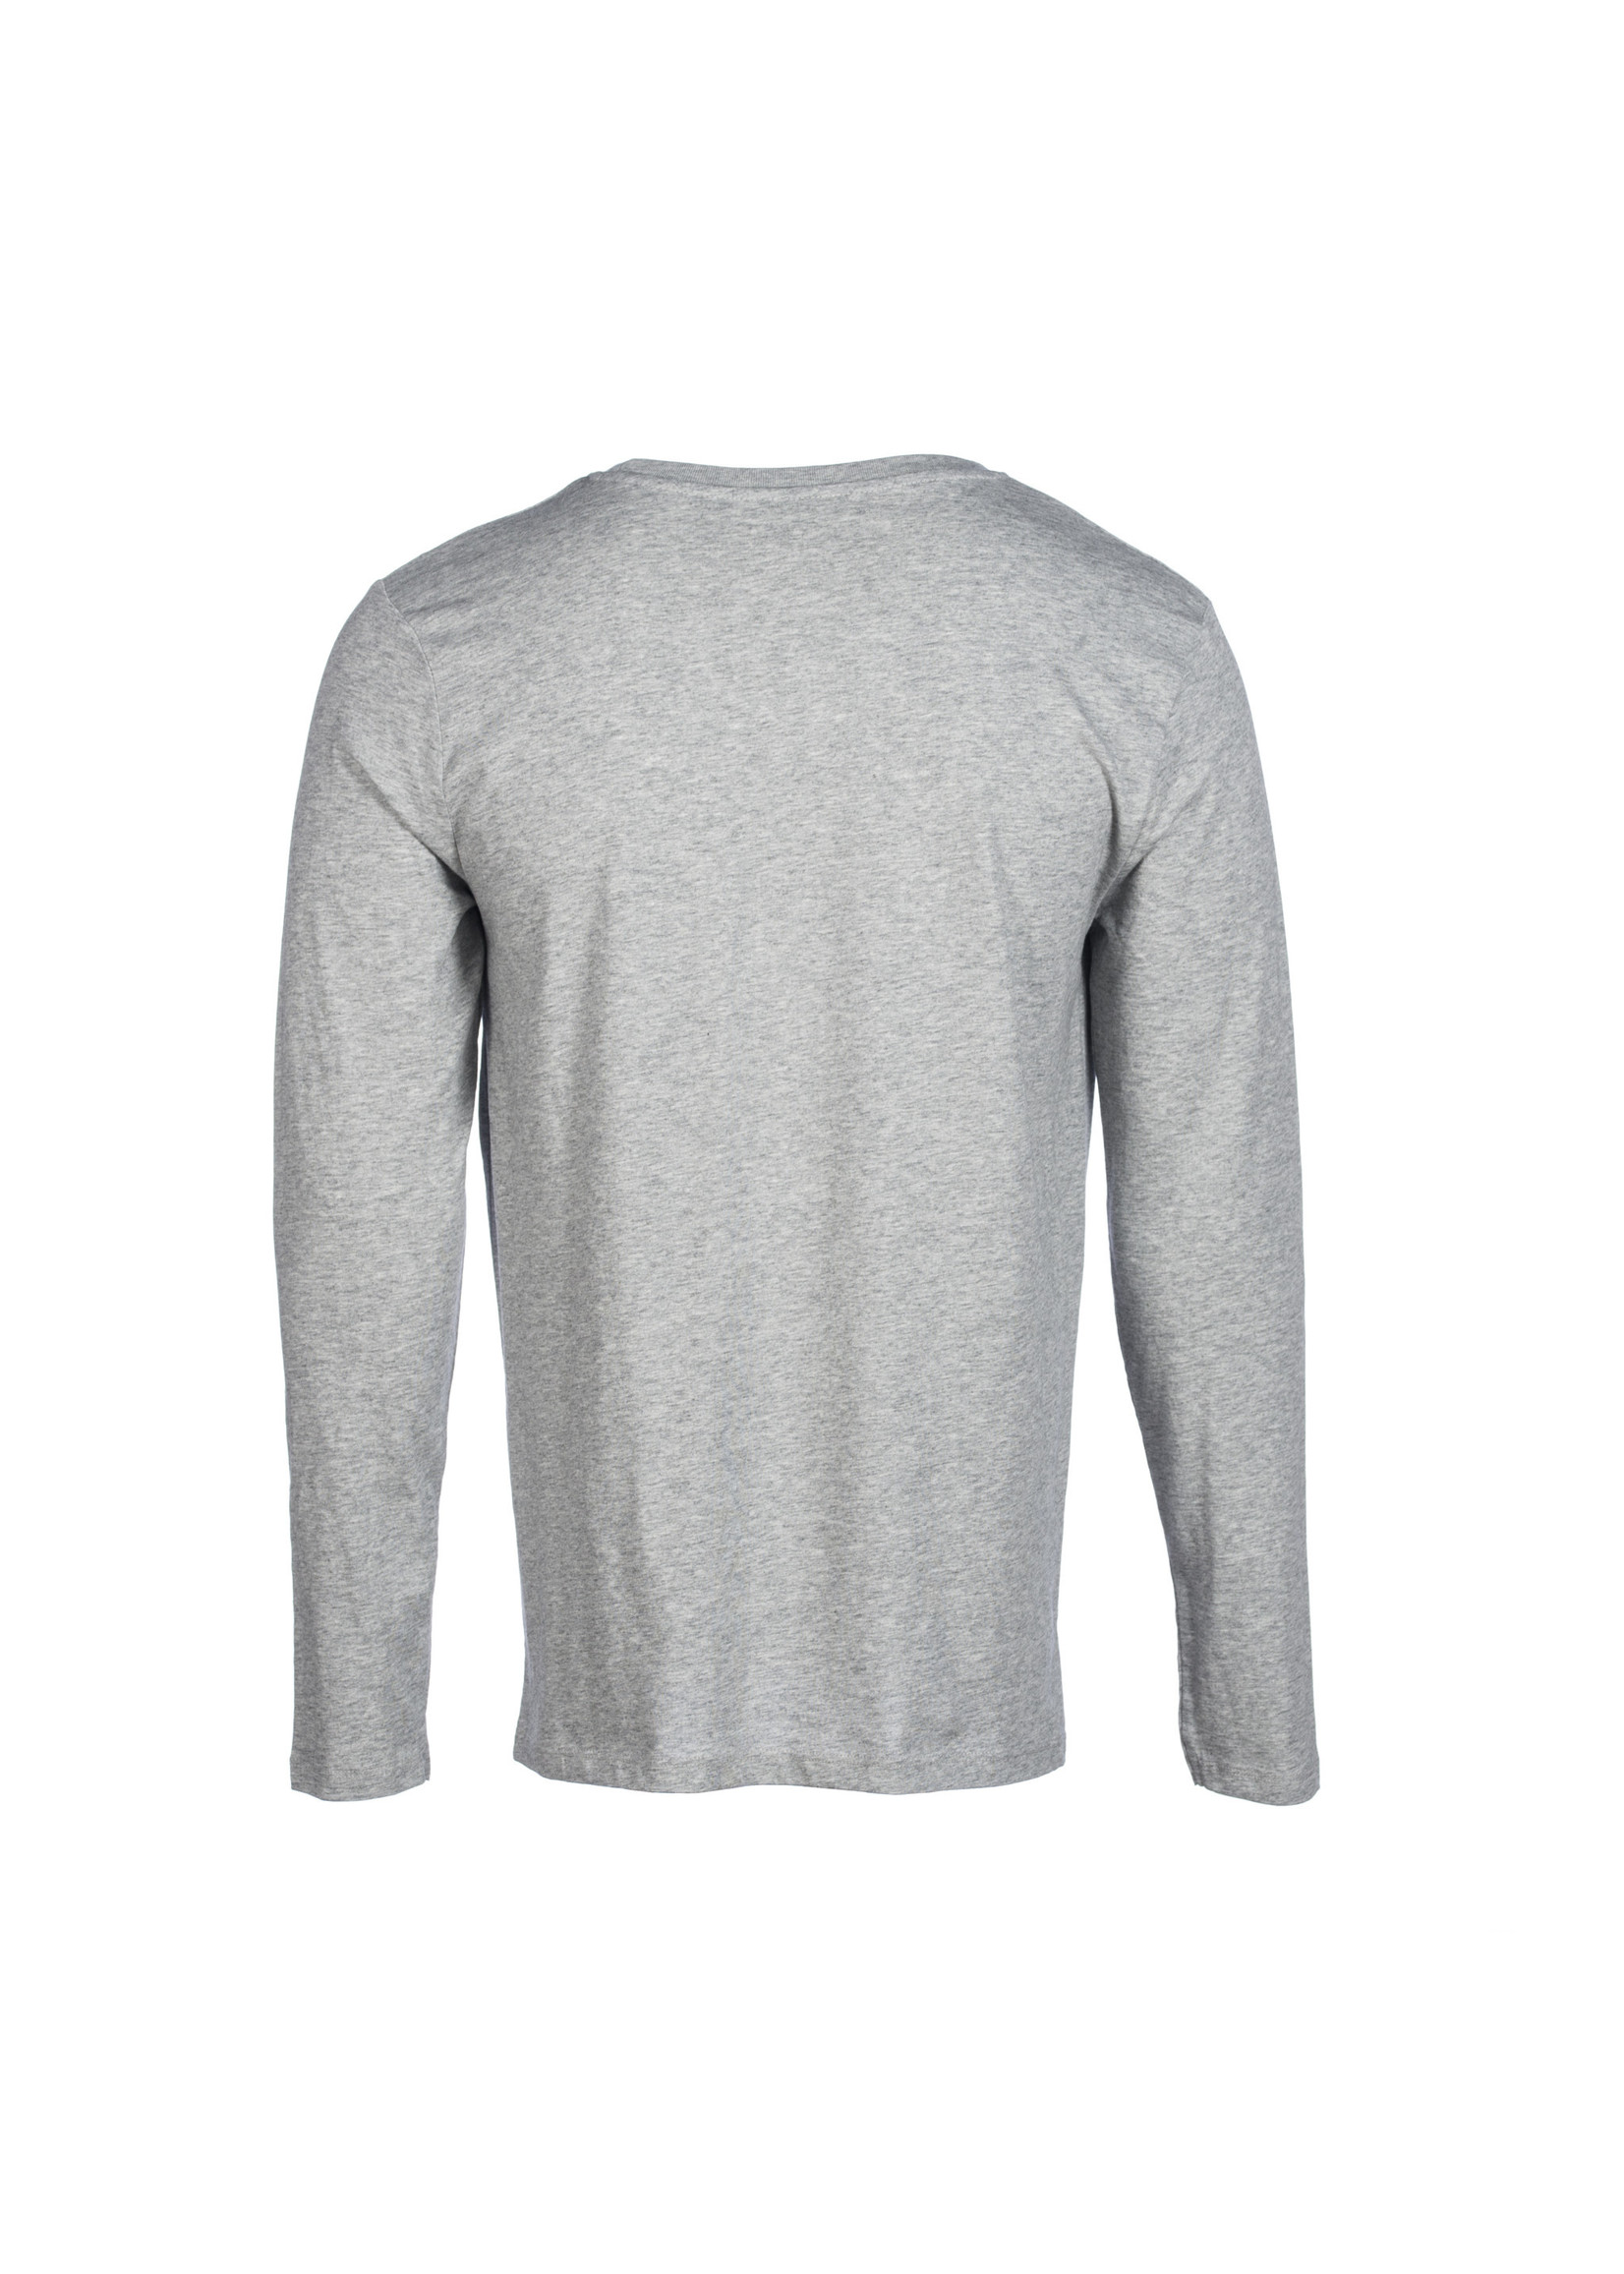 420 Original Clothing Farm T-shirt 420 grey long-sleeve